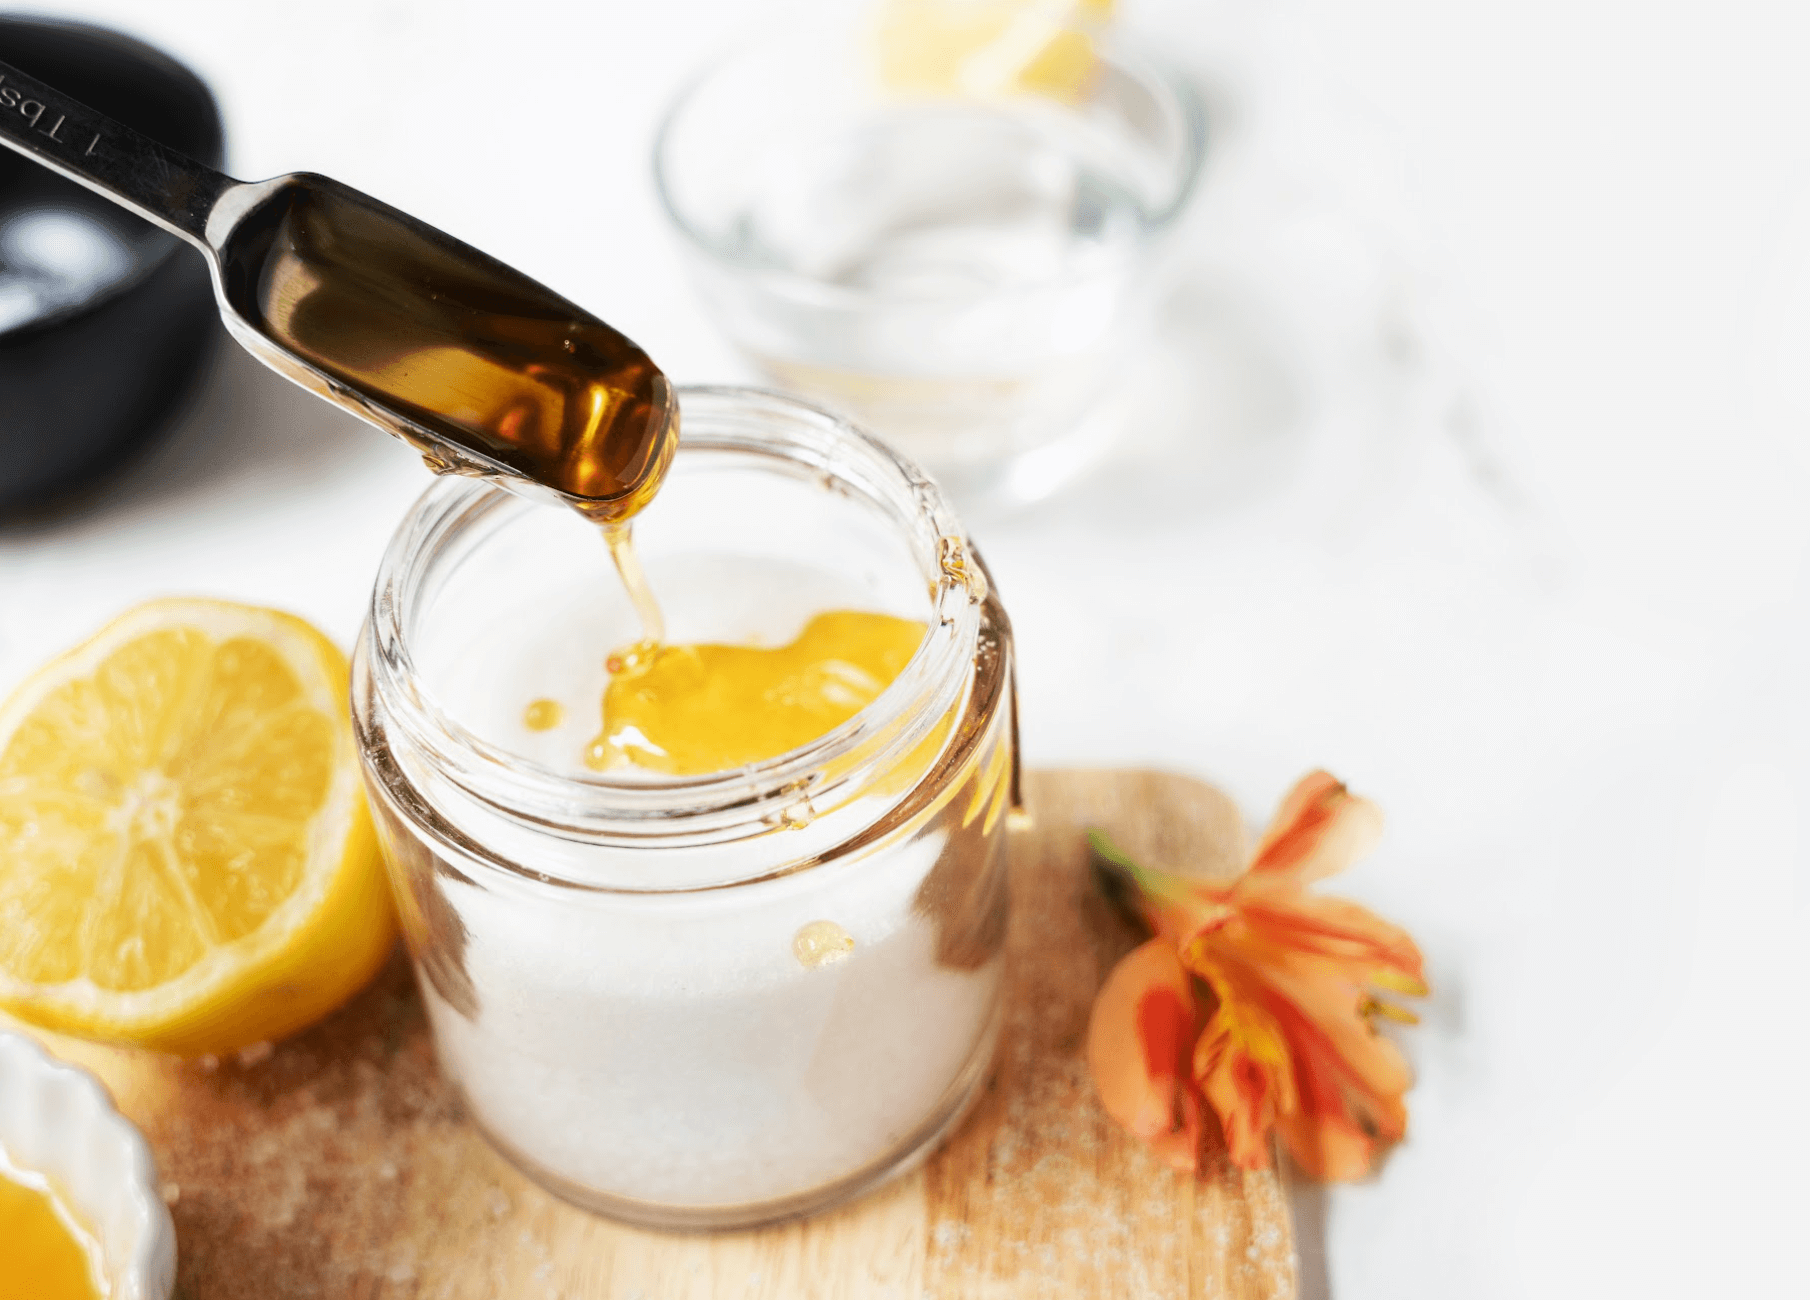 Add Honey into jar of Epsom salt